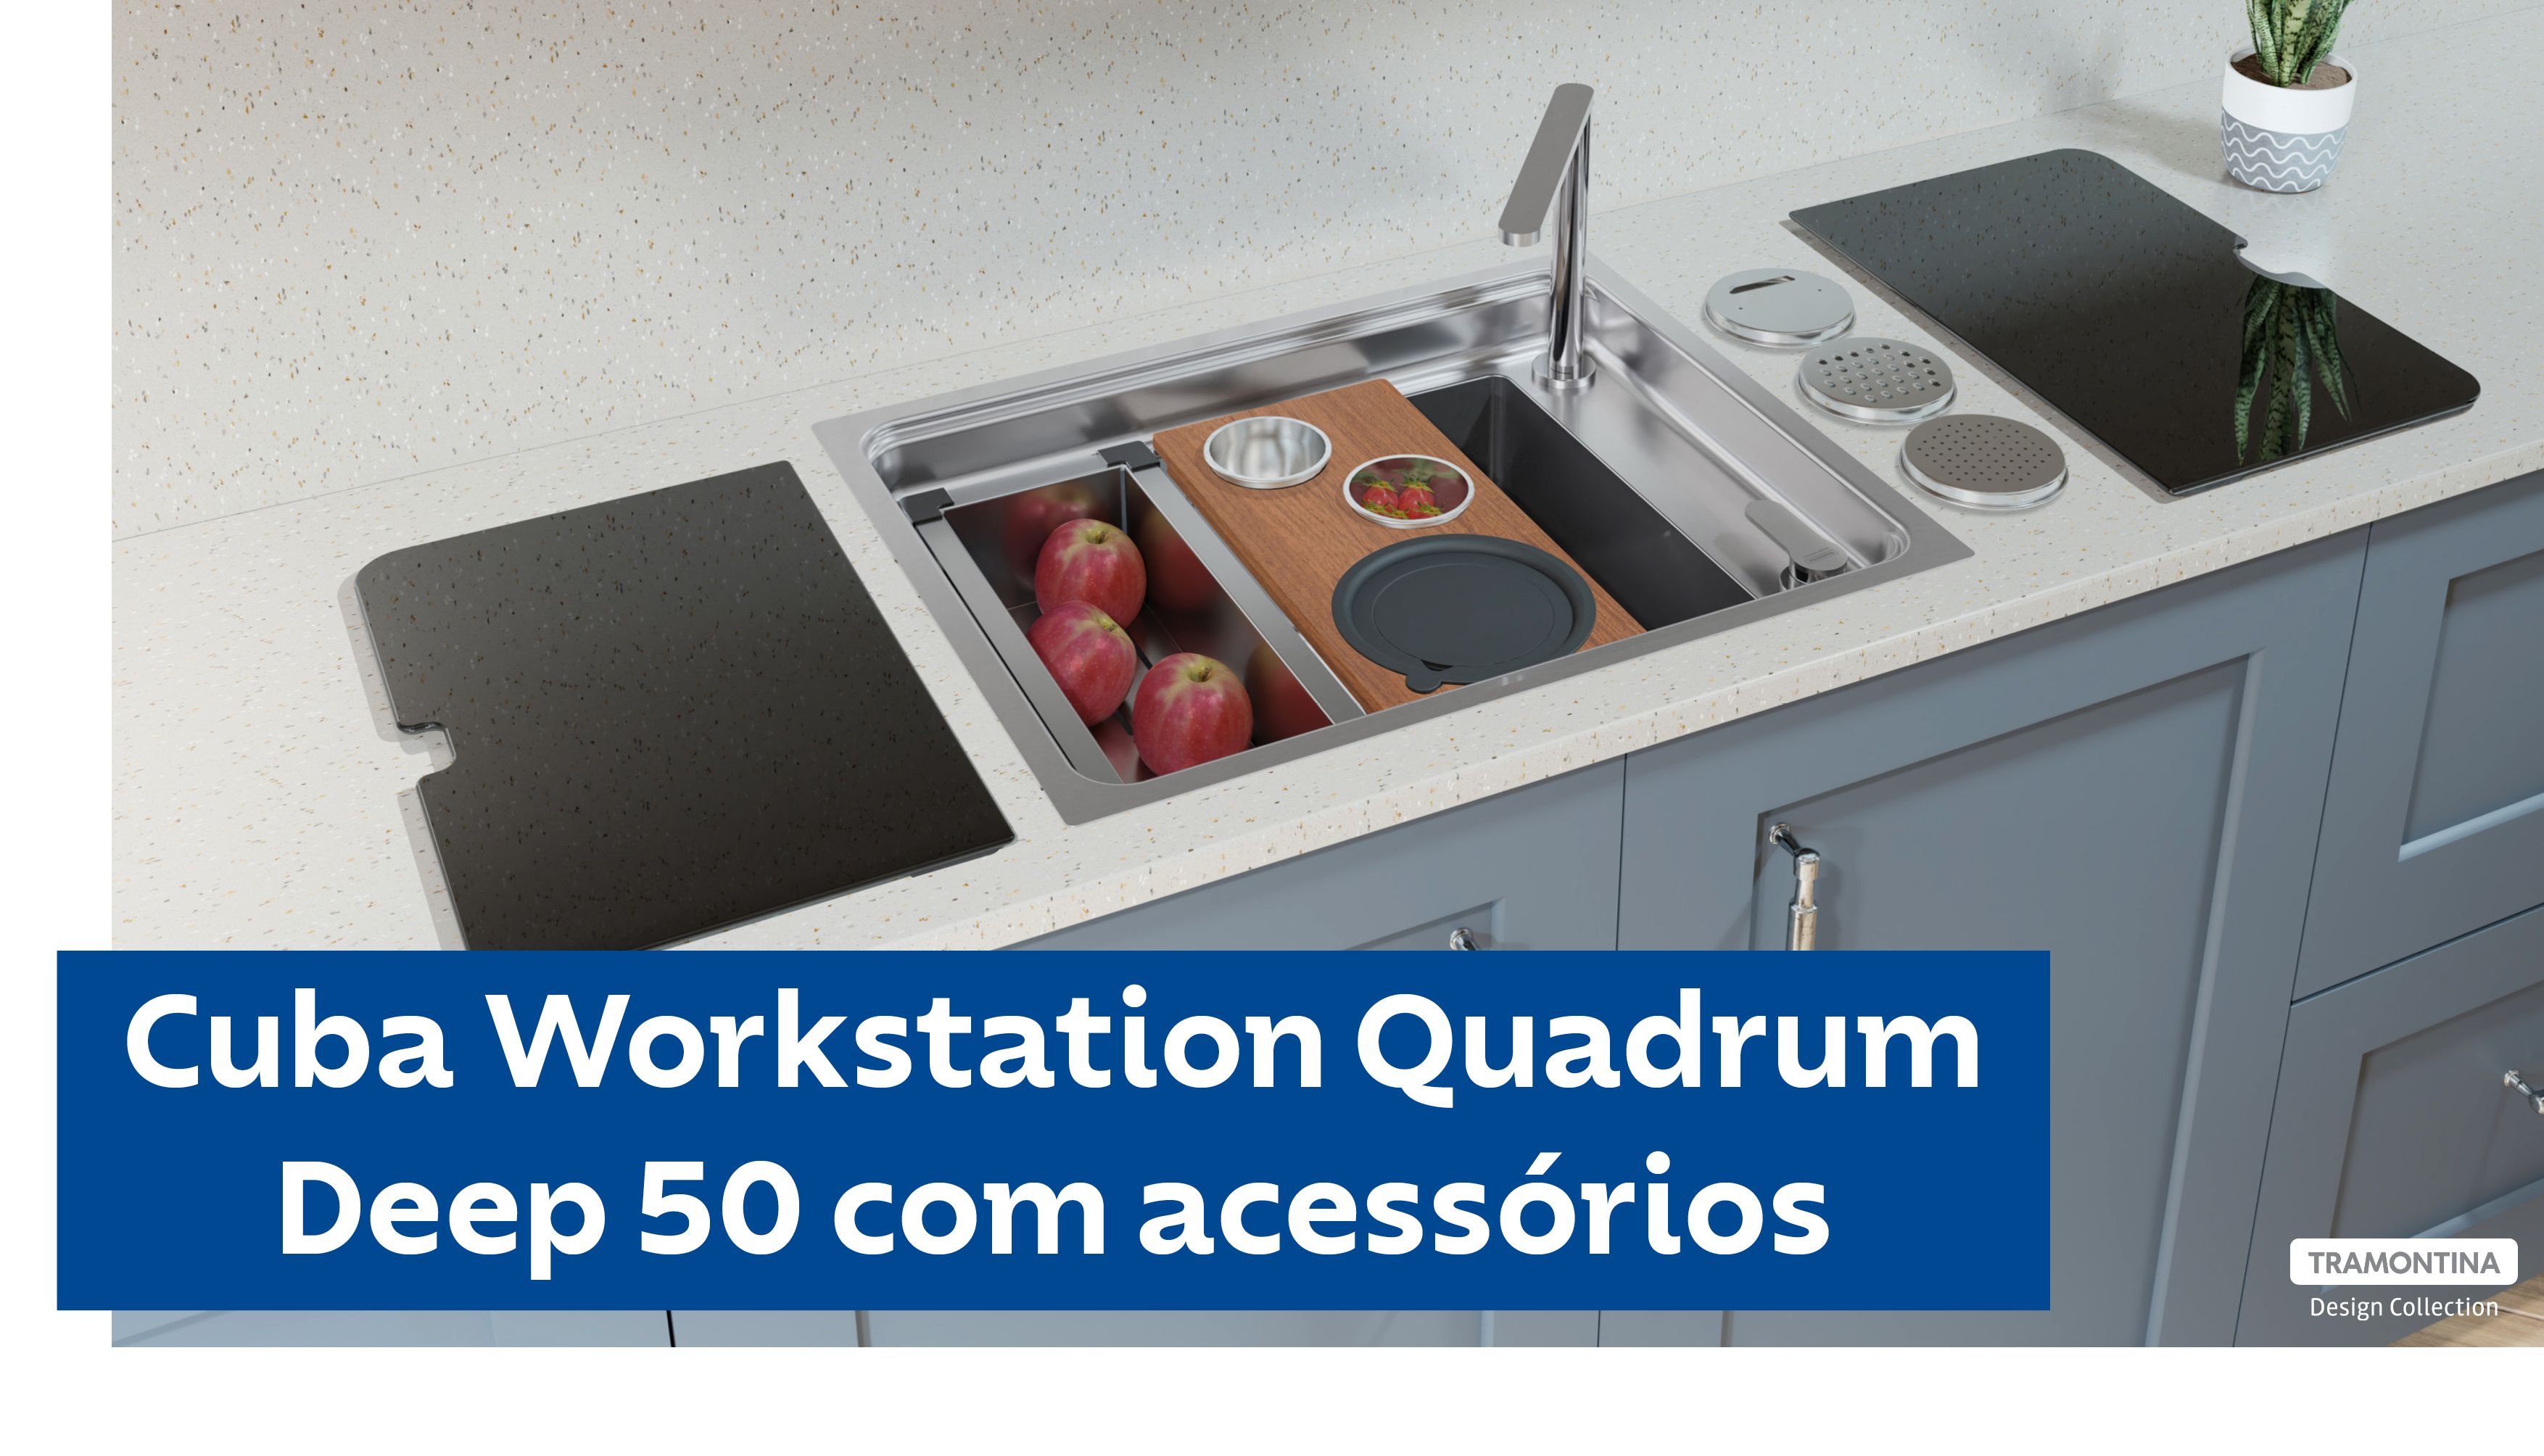 Fregadero de Empotrar Tramontina Design Collection Workstation Quadrum Deep  50 en Acero Inoxidable con Accesorios